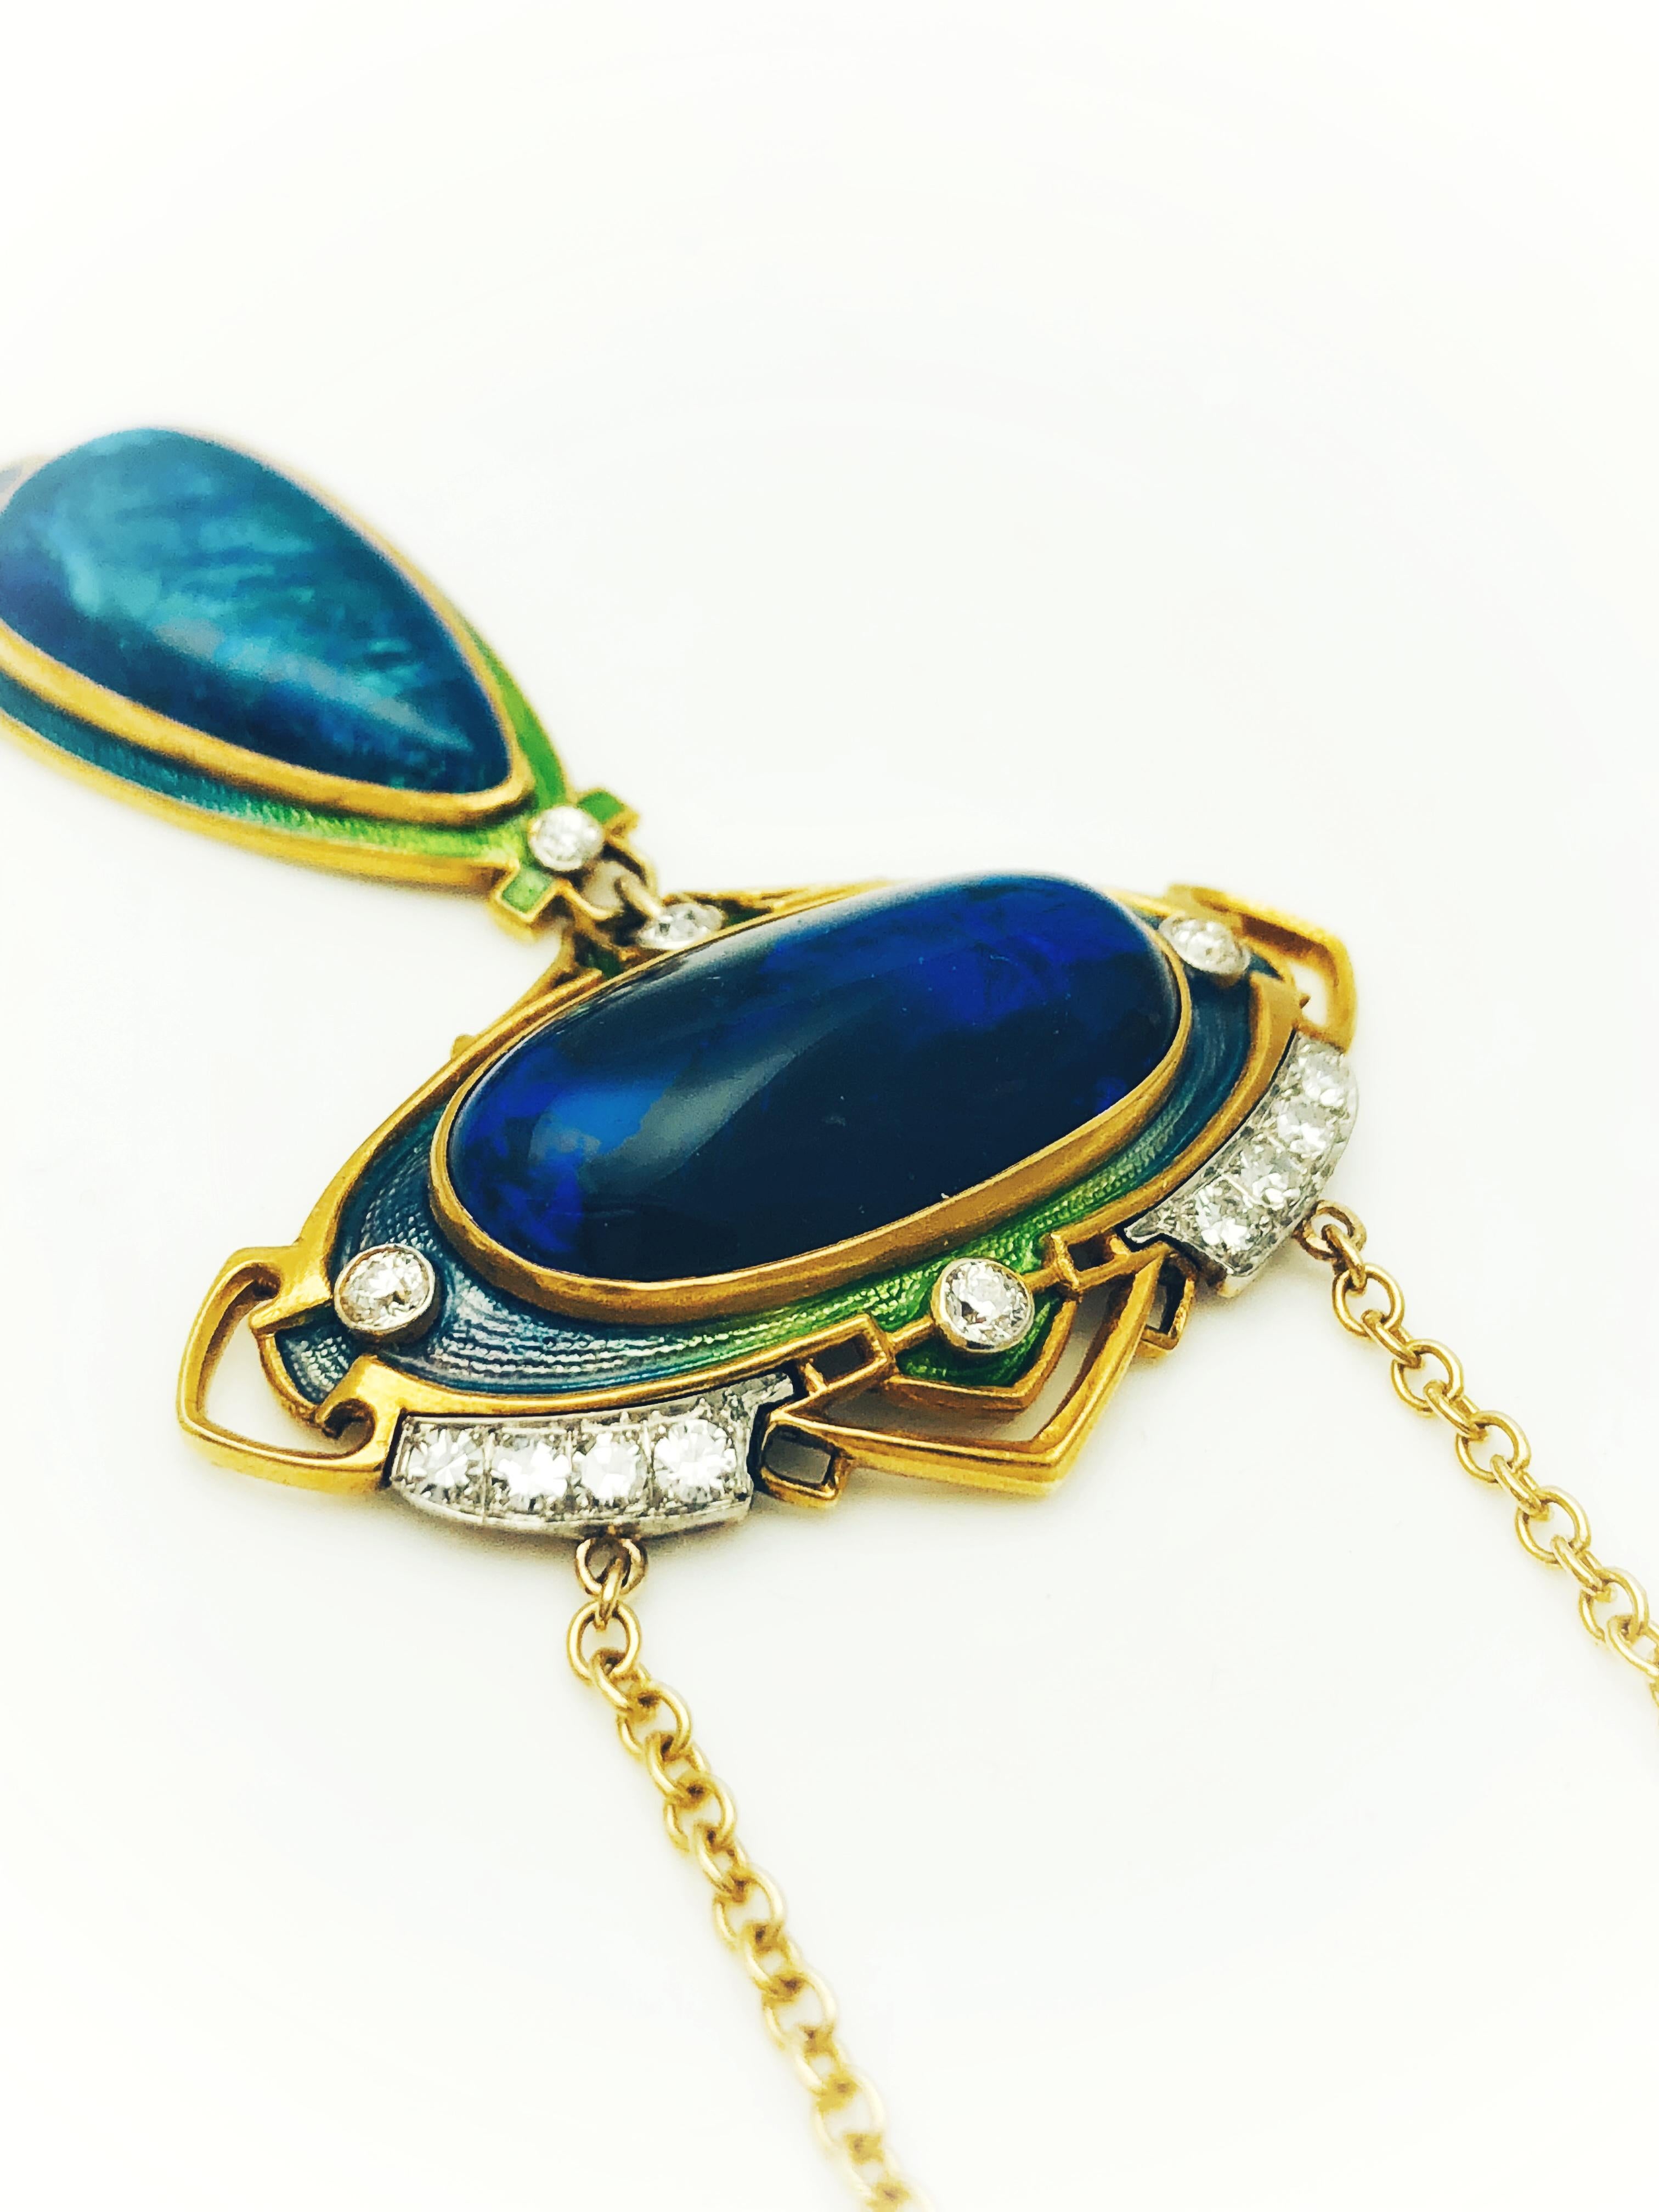 Old Mine Cut Durand & Company Rare Art Nouveau Gold, Black Opal and Diamond Necklace